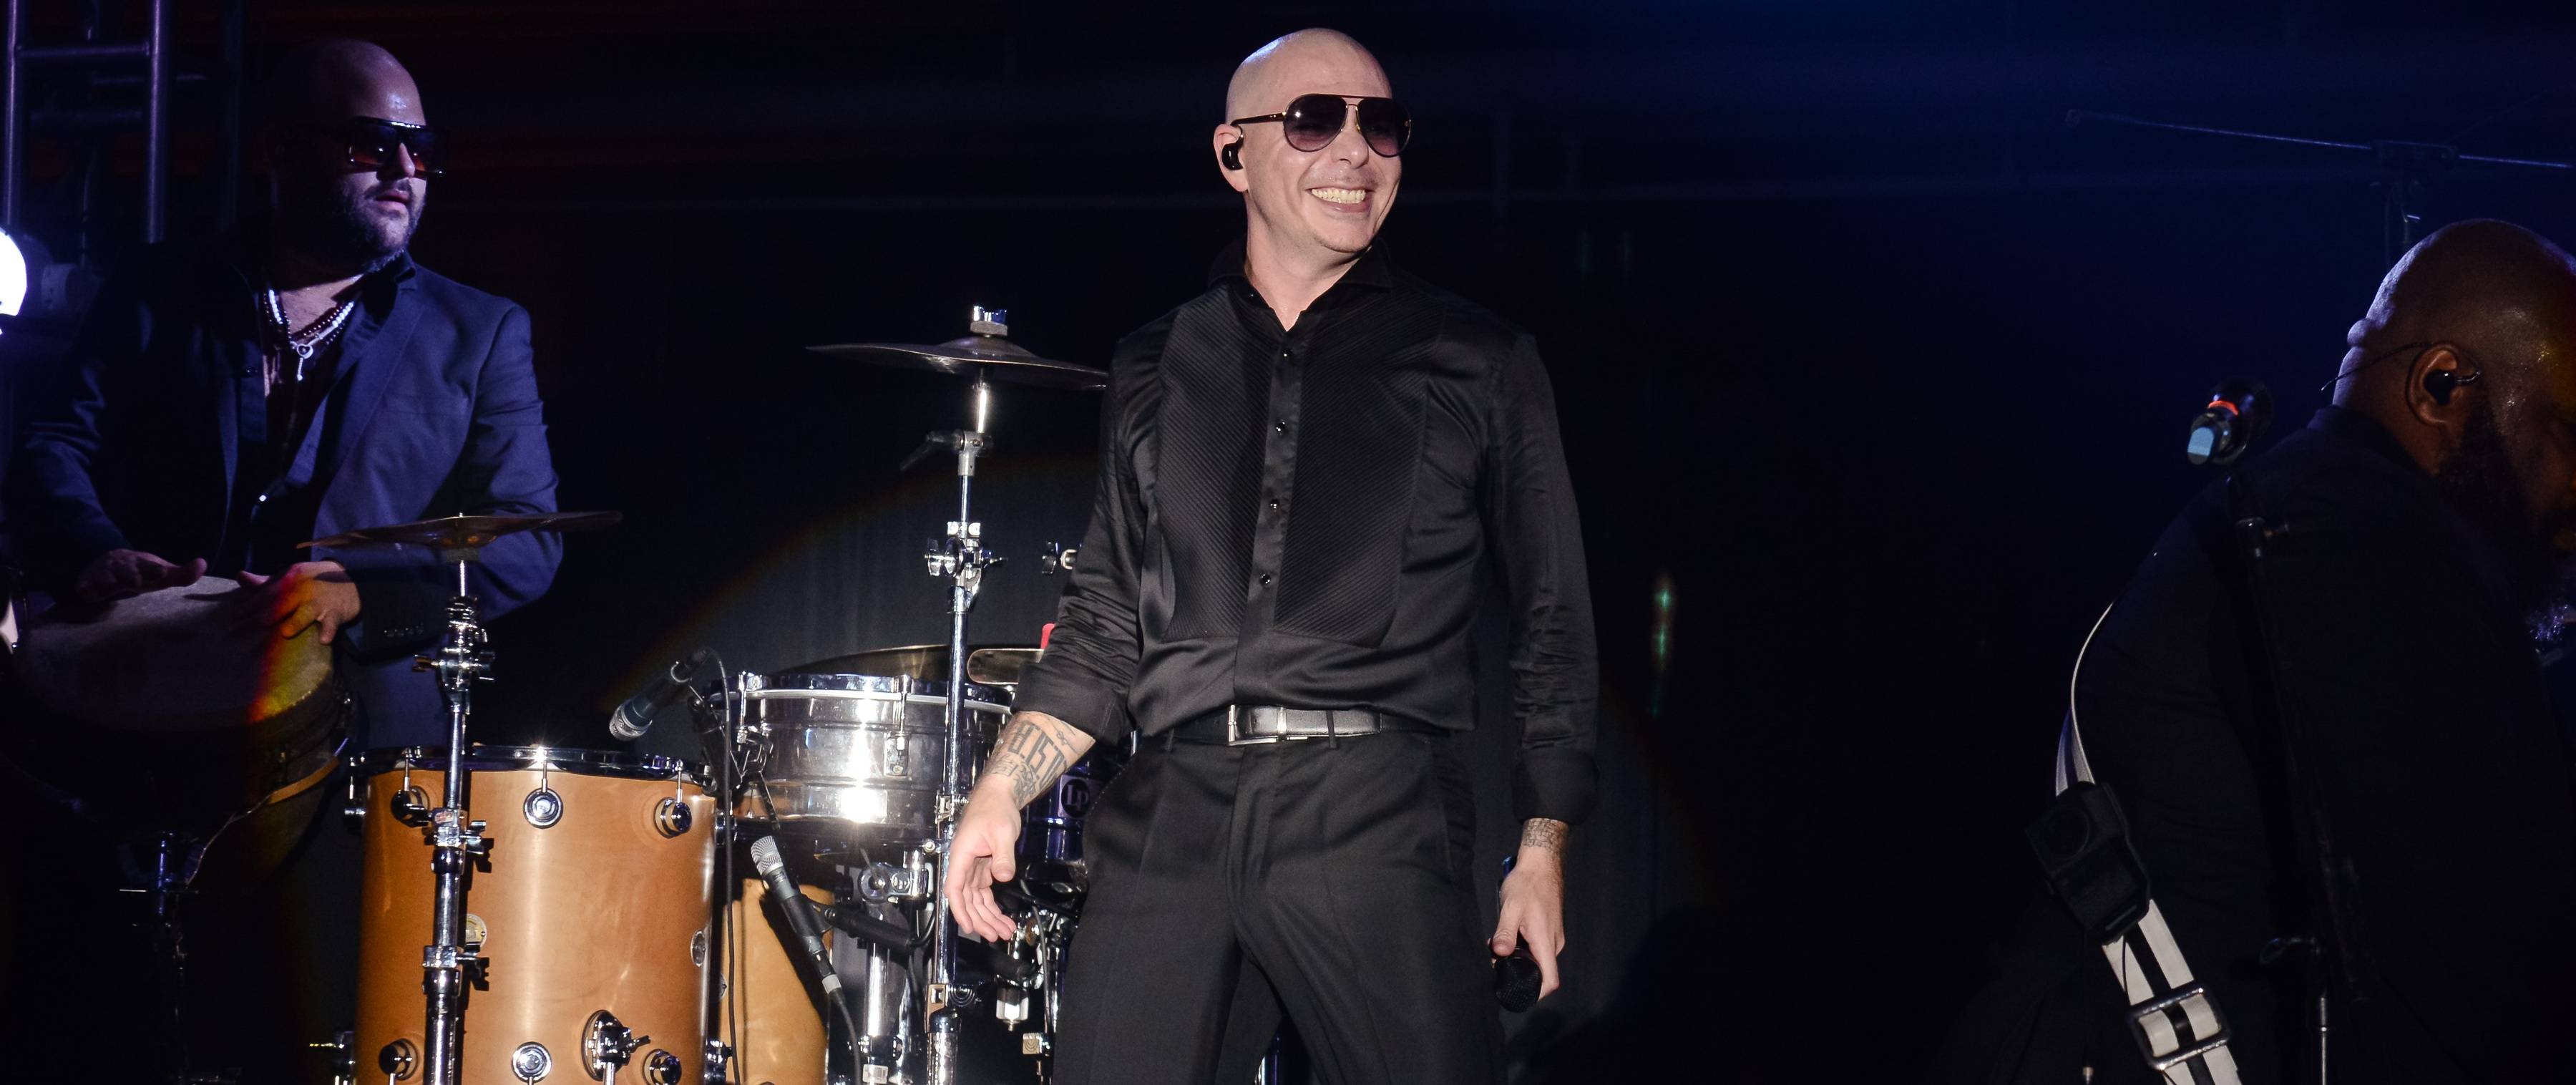 Las Vegas Concert Guide: Pitbull, Enrique Iglesias and Ricky Martin